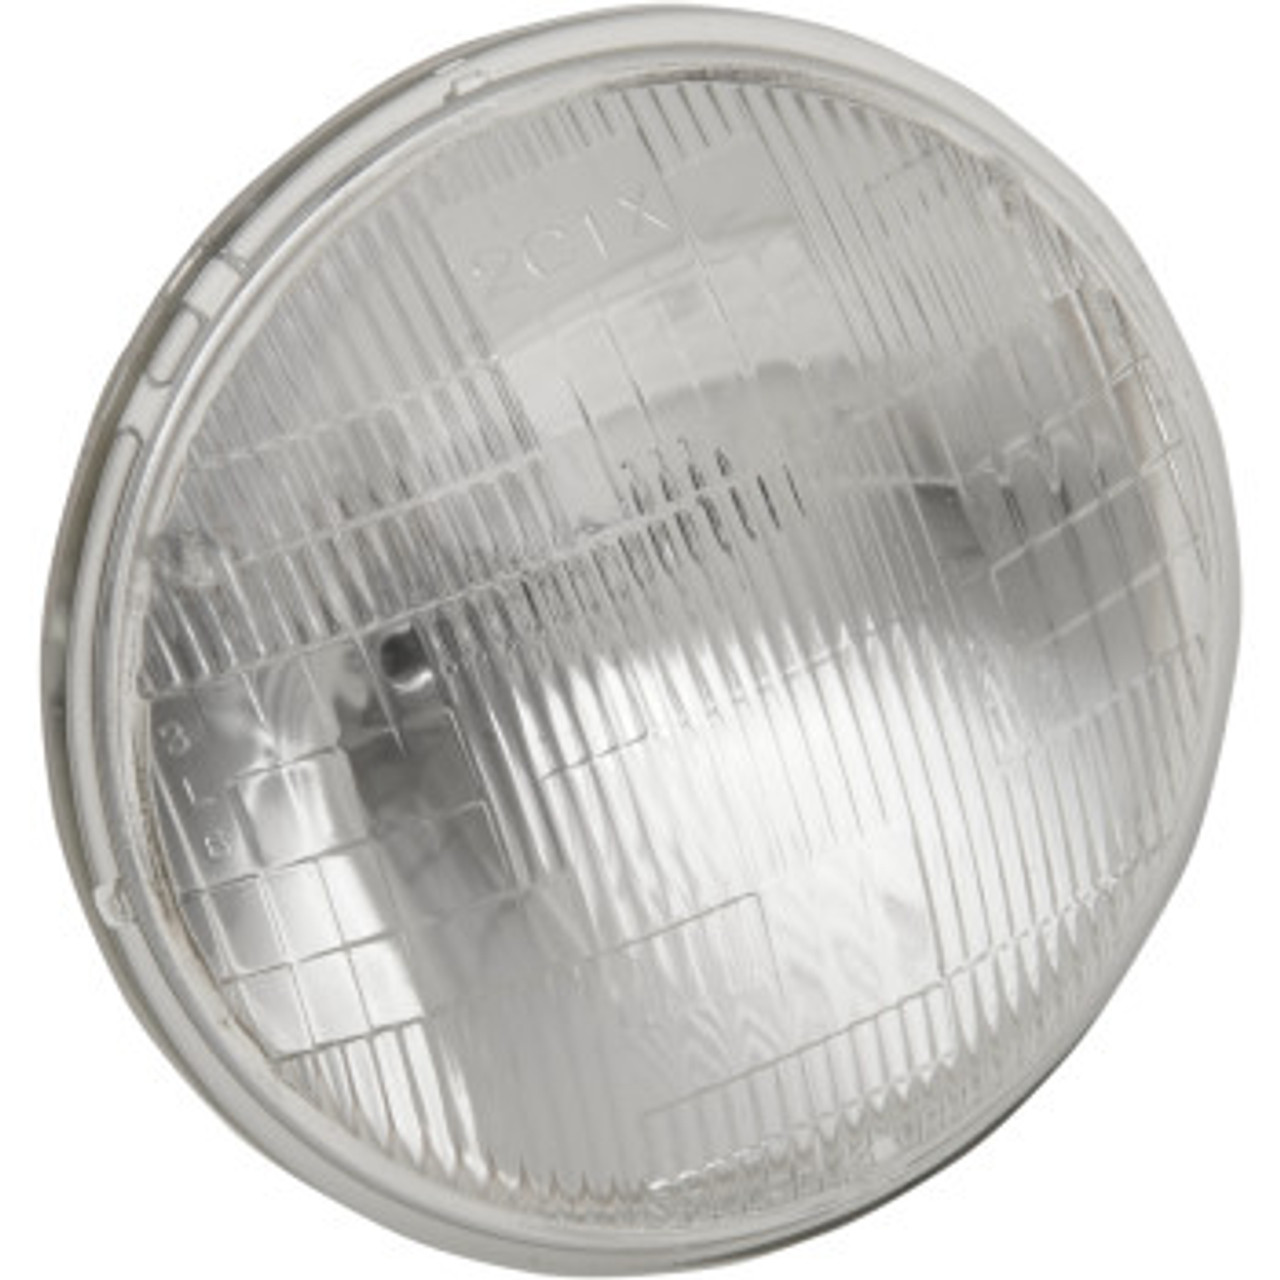 Sealed Beam Headlight 5 3/4 inch 12 volt 37.5/60W 2001-1187 66-84134T